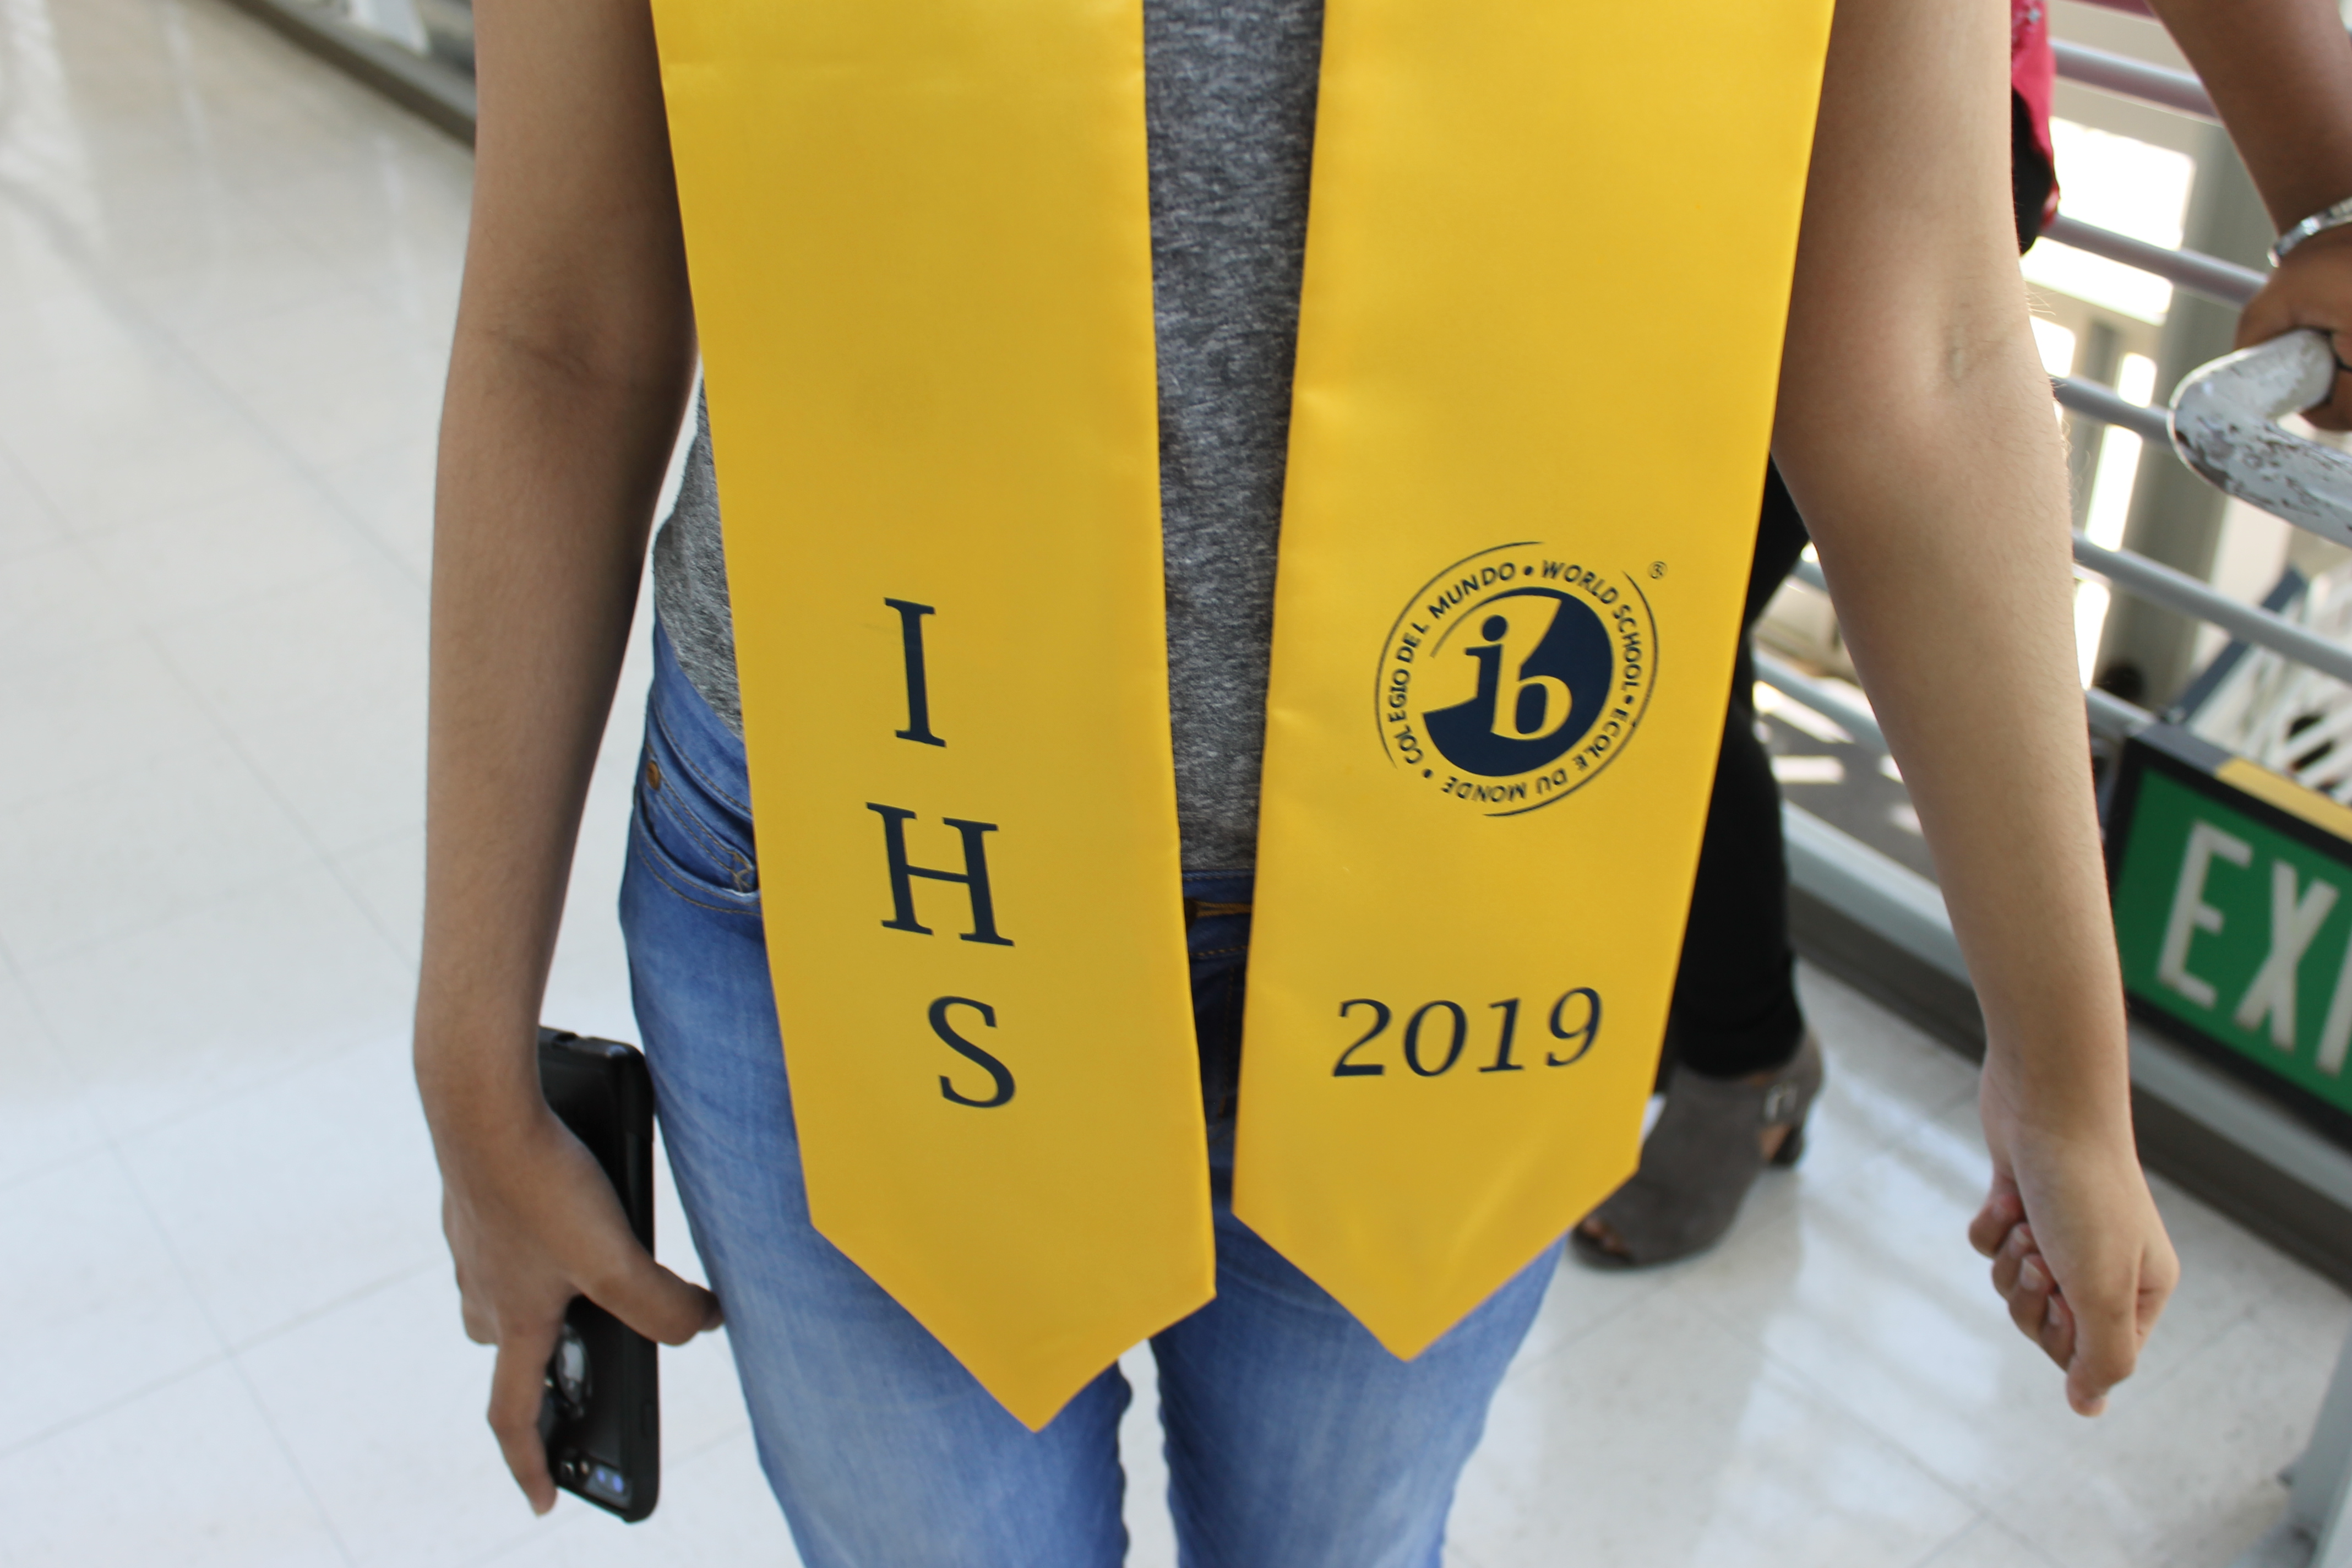 IHS IB graduation sash